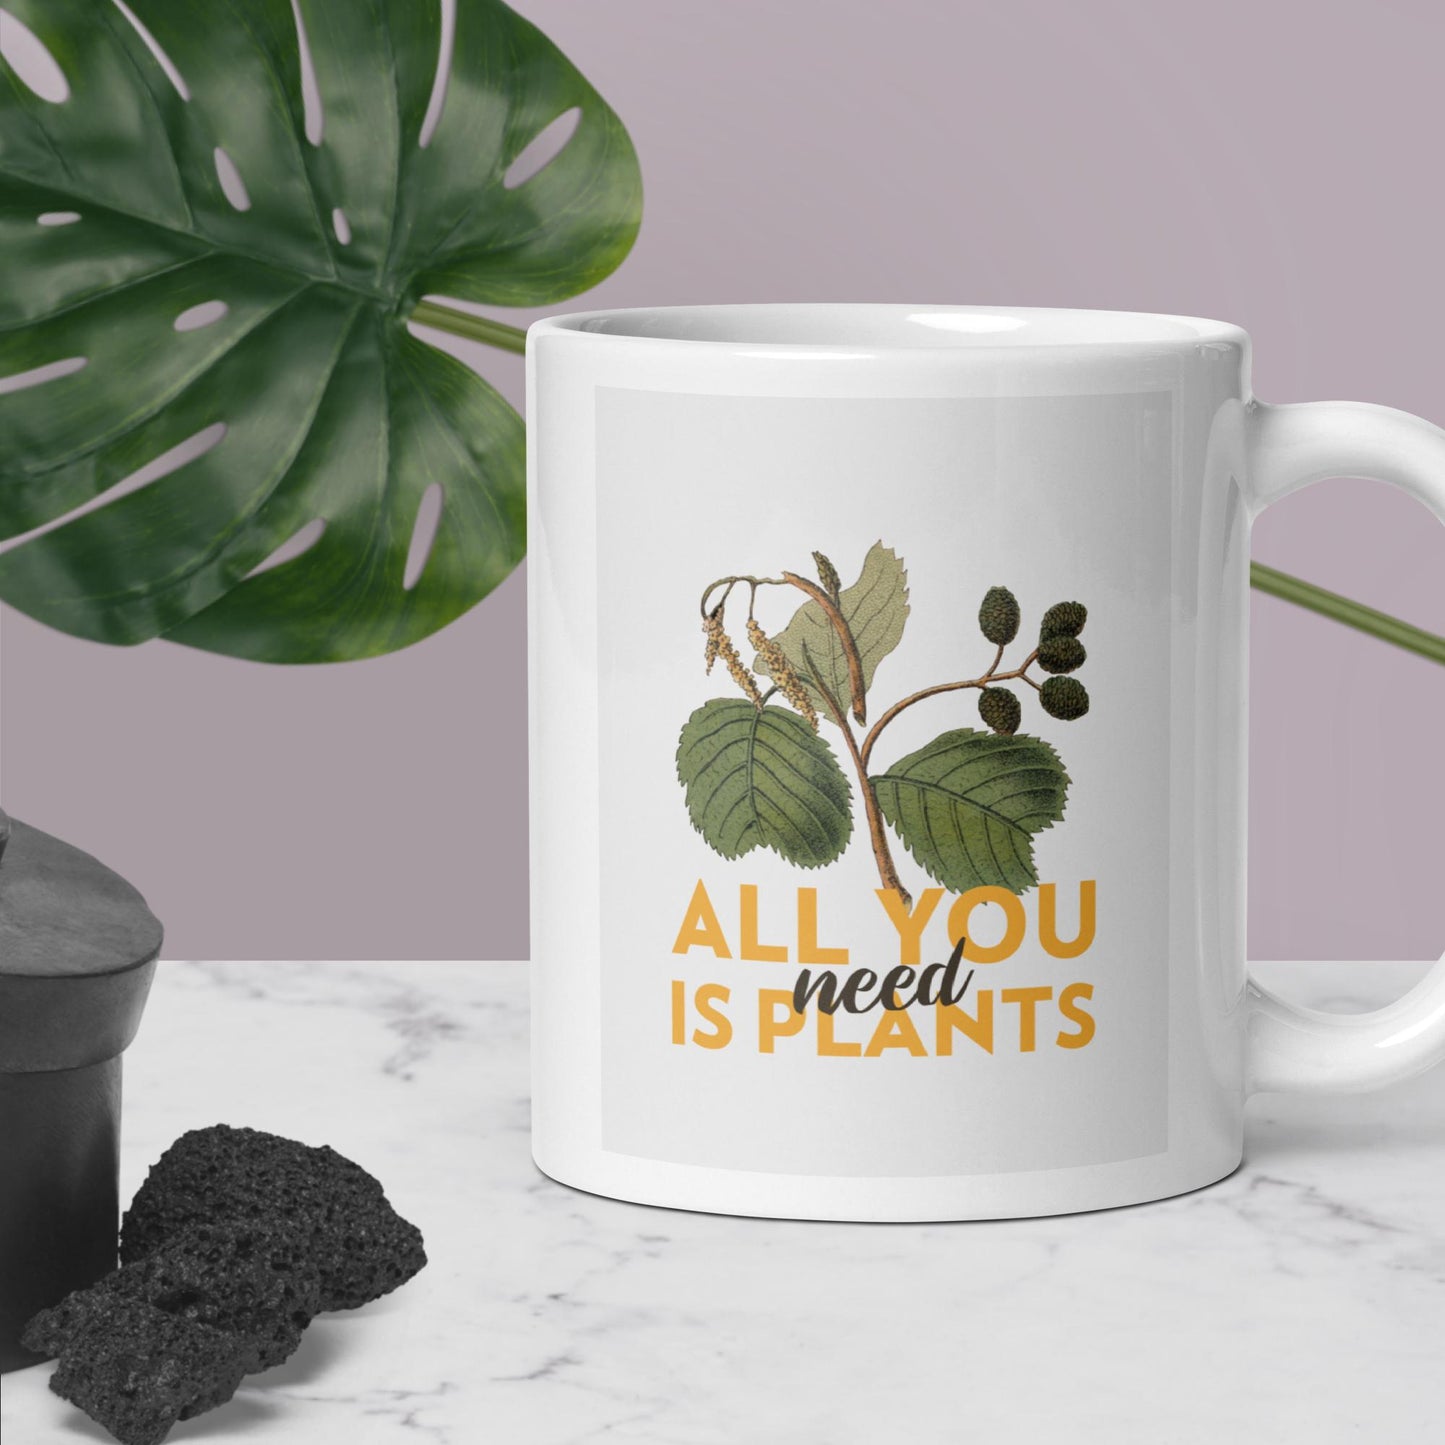 ALL YOU NEED IS PLANTS White glossy mug